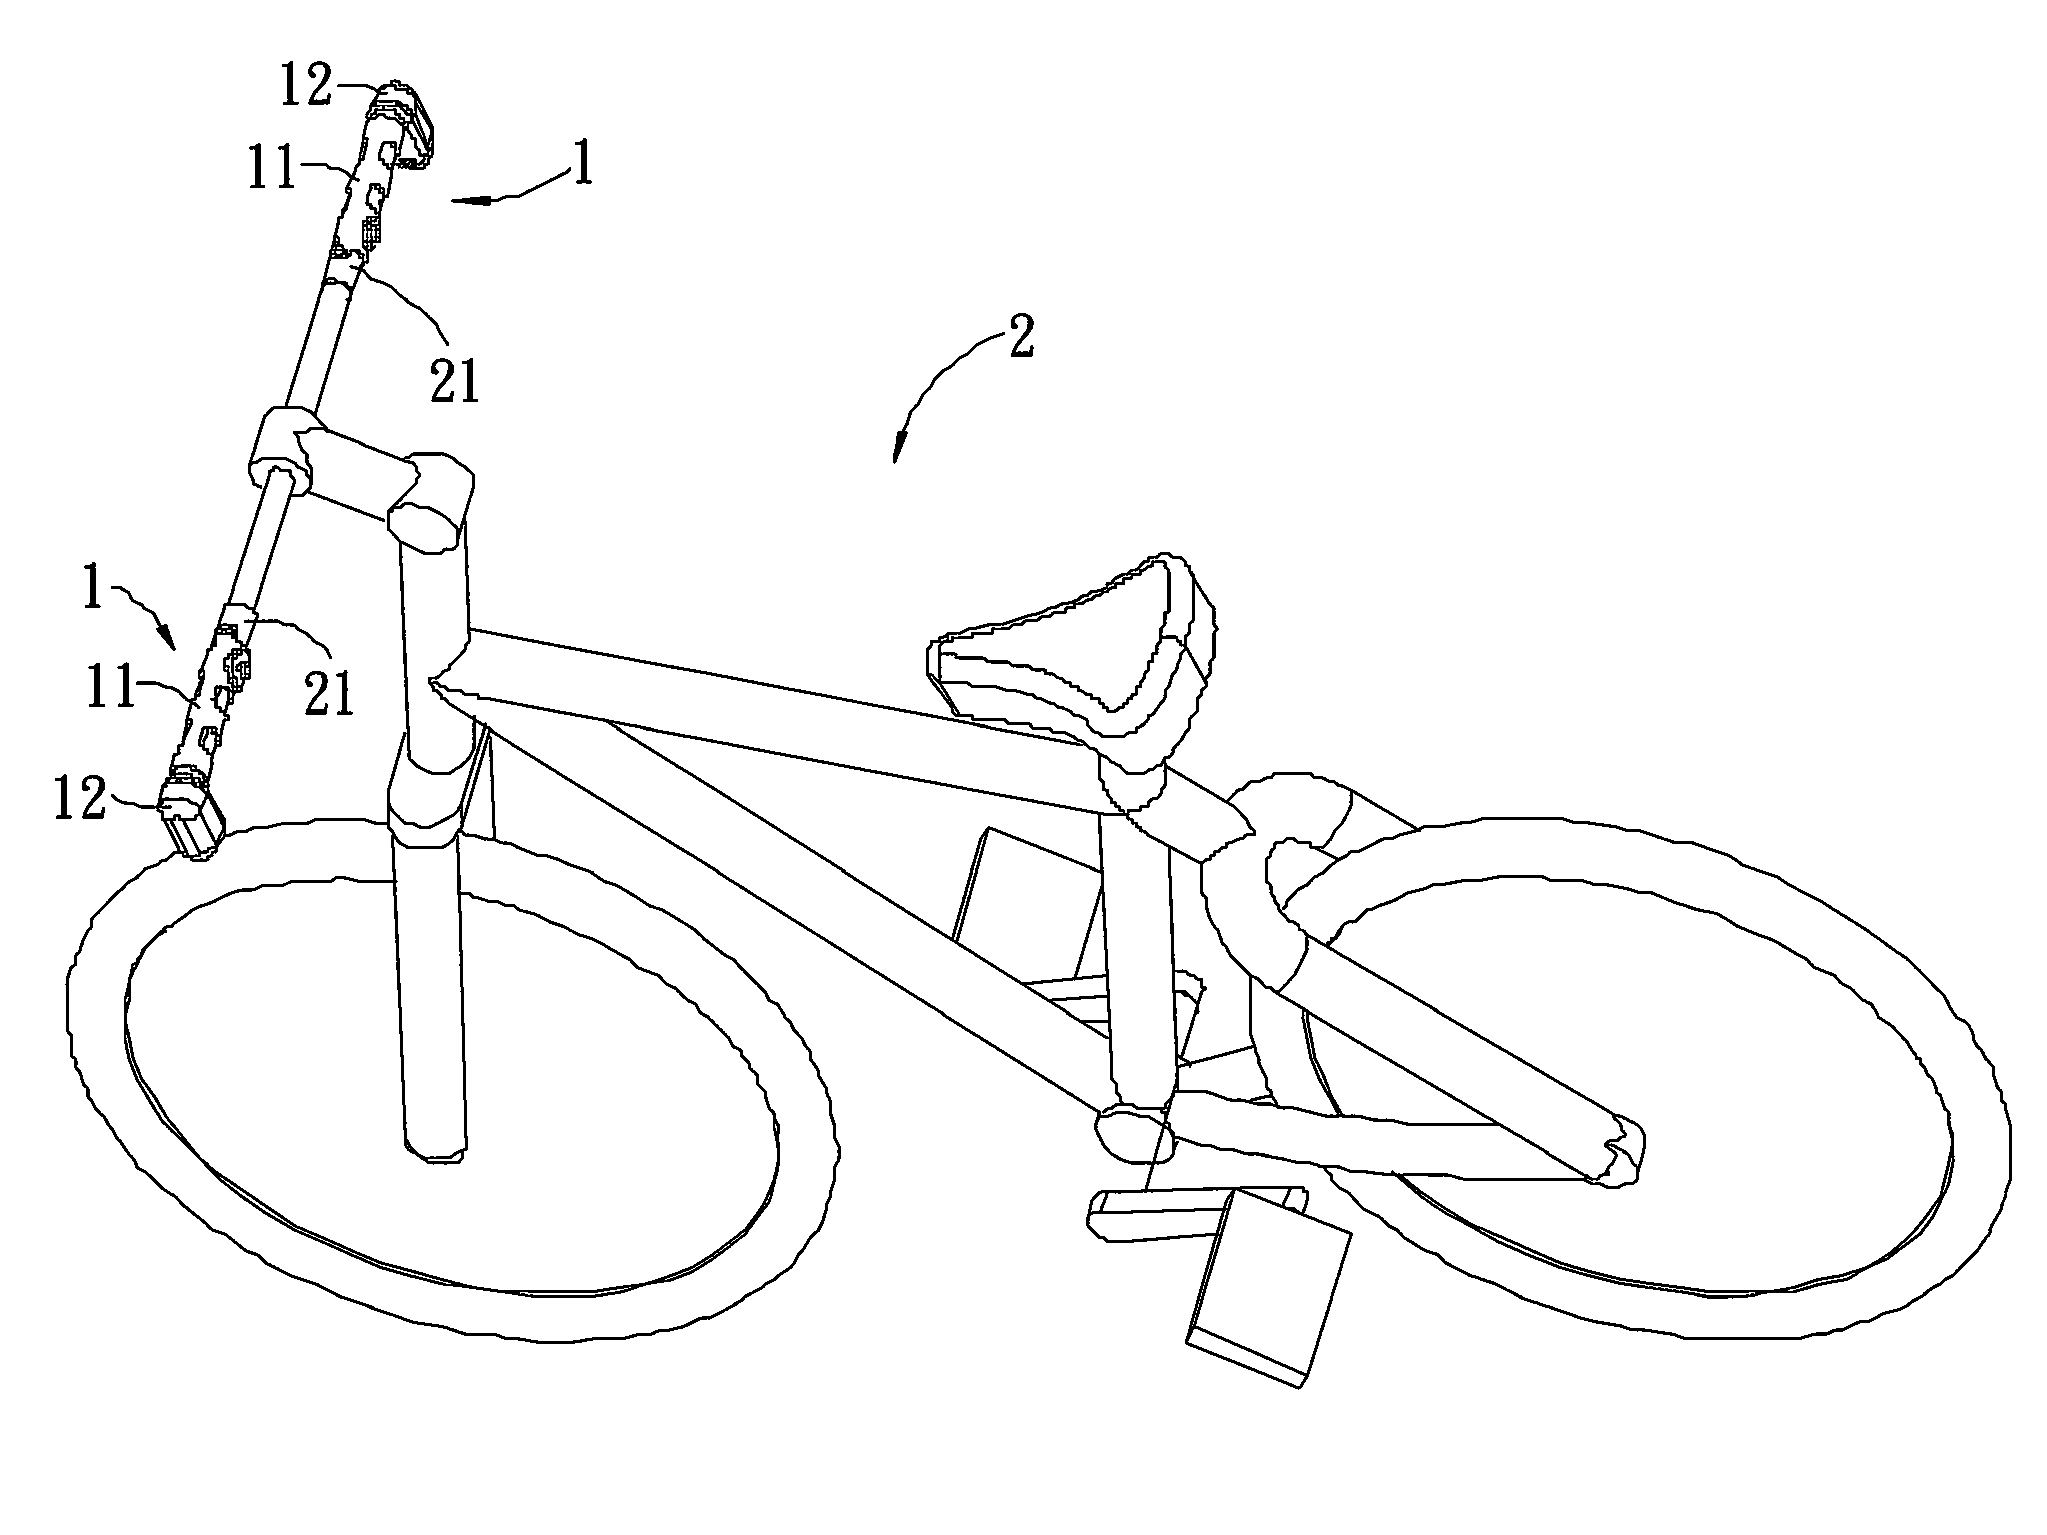 Bike handlebar grip structure hanging caution/direction light device